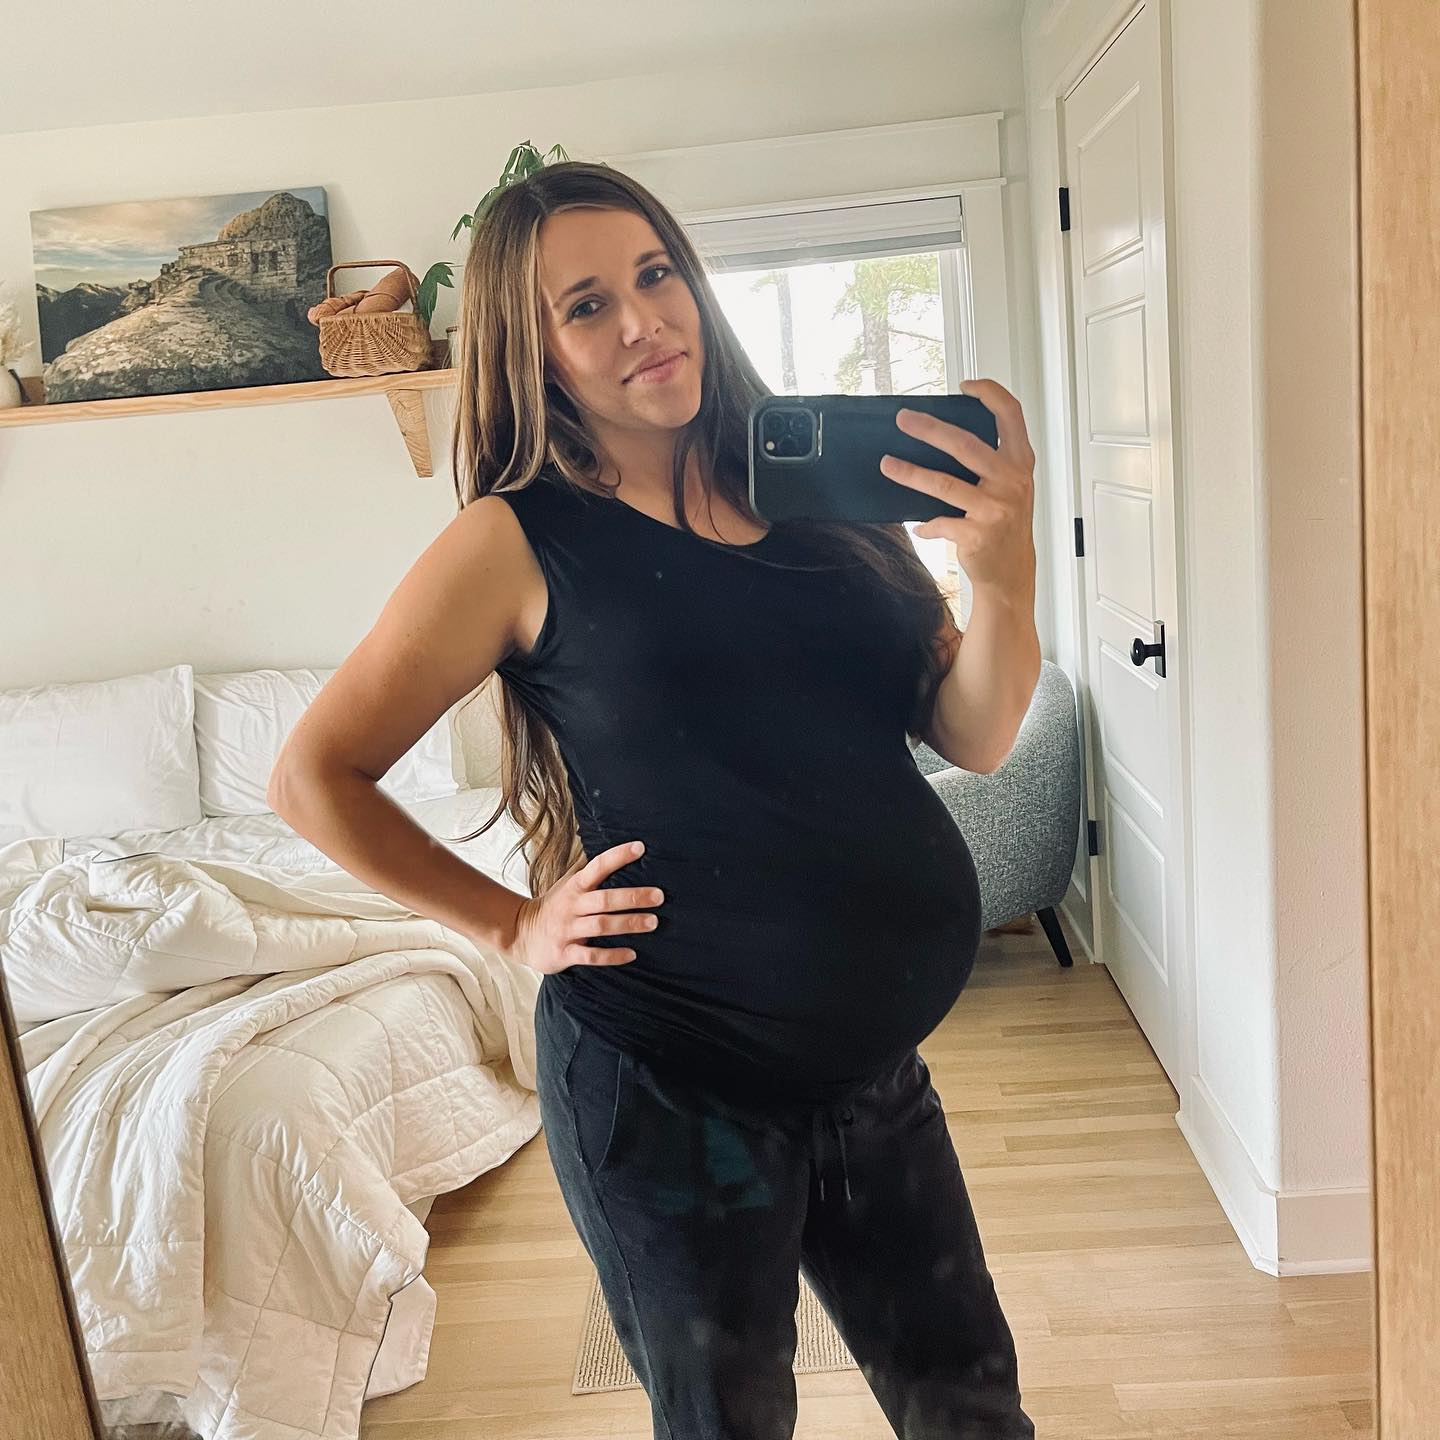 Jessa showed off her baby bump in a mirror selfie